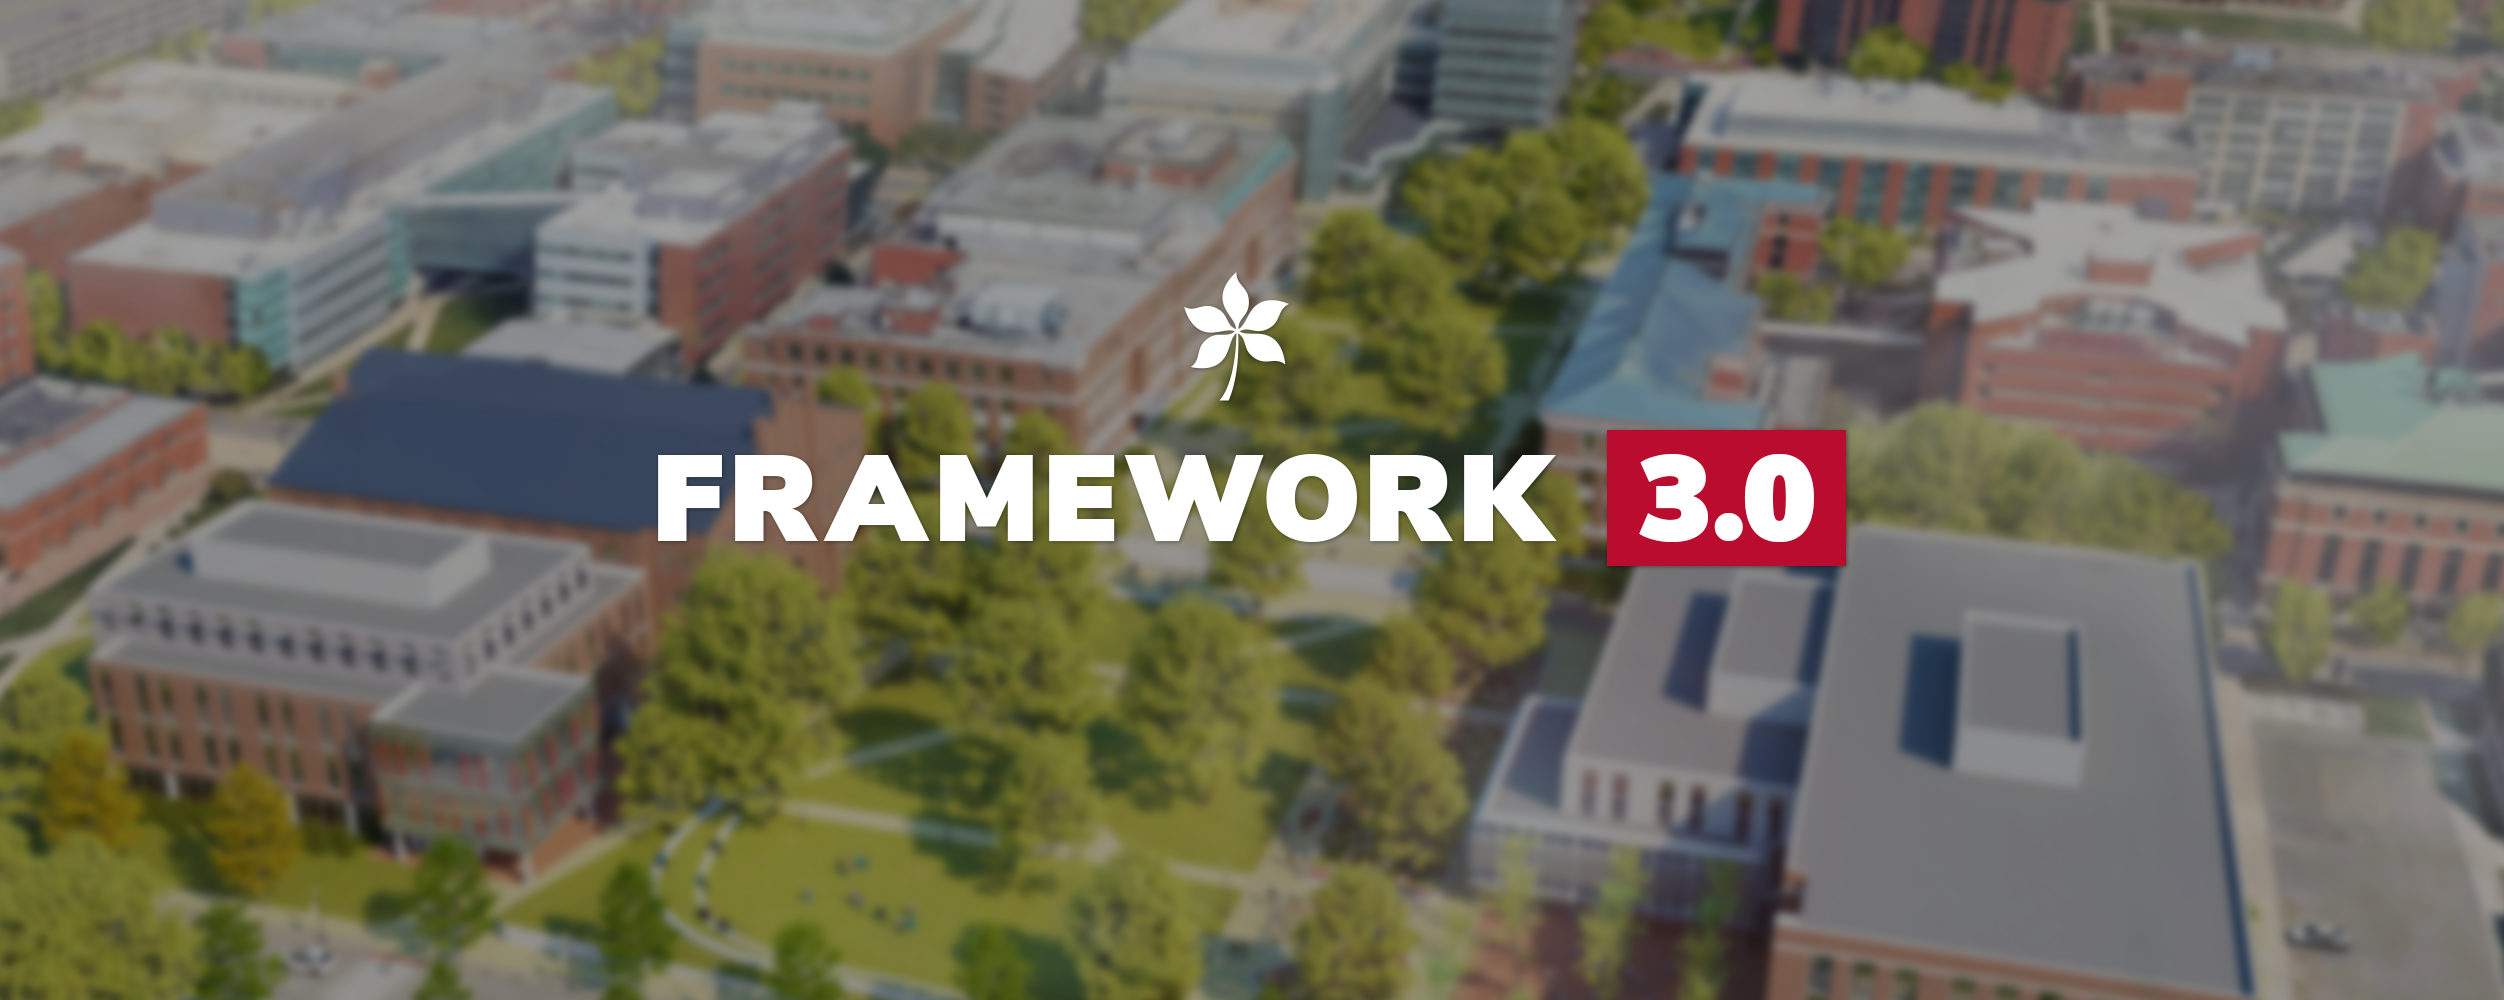 Framework 3.0